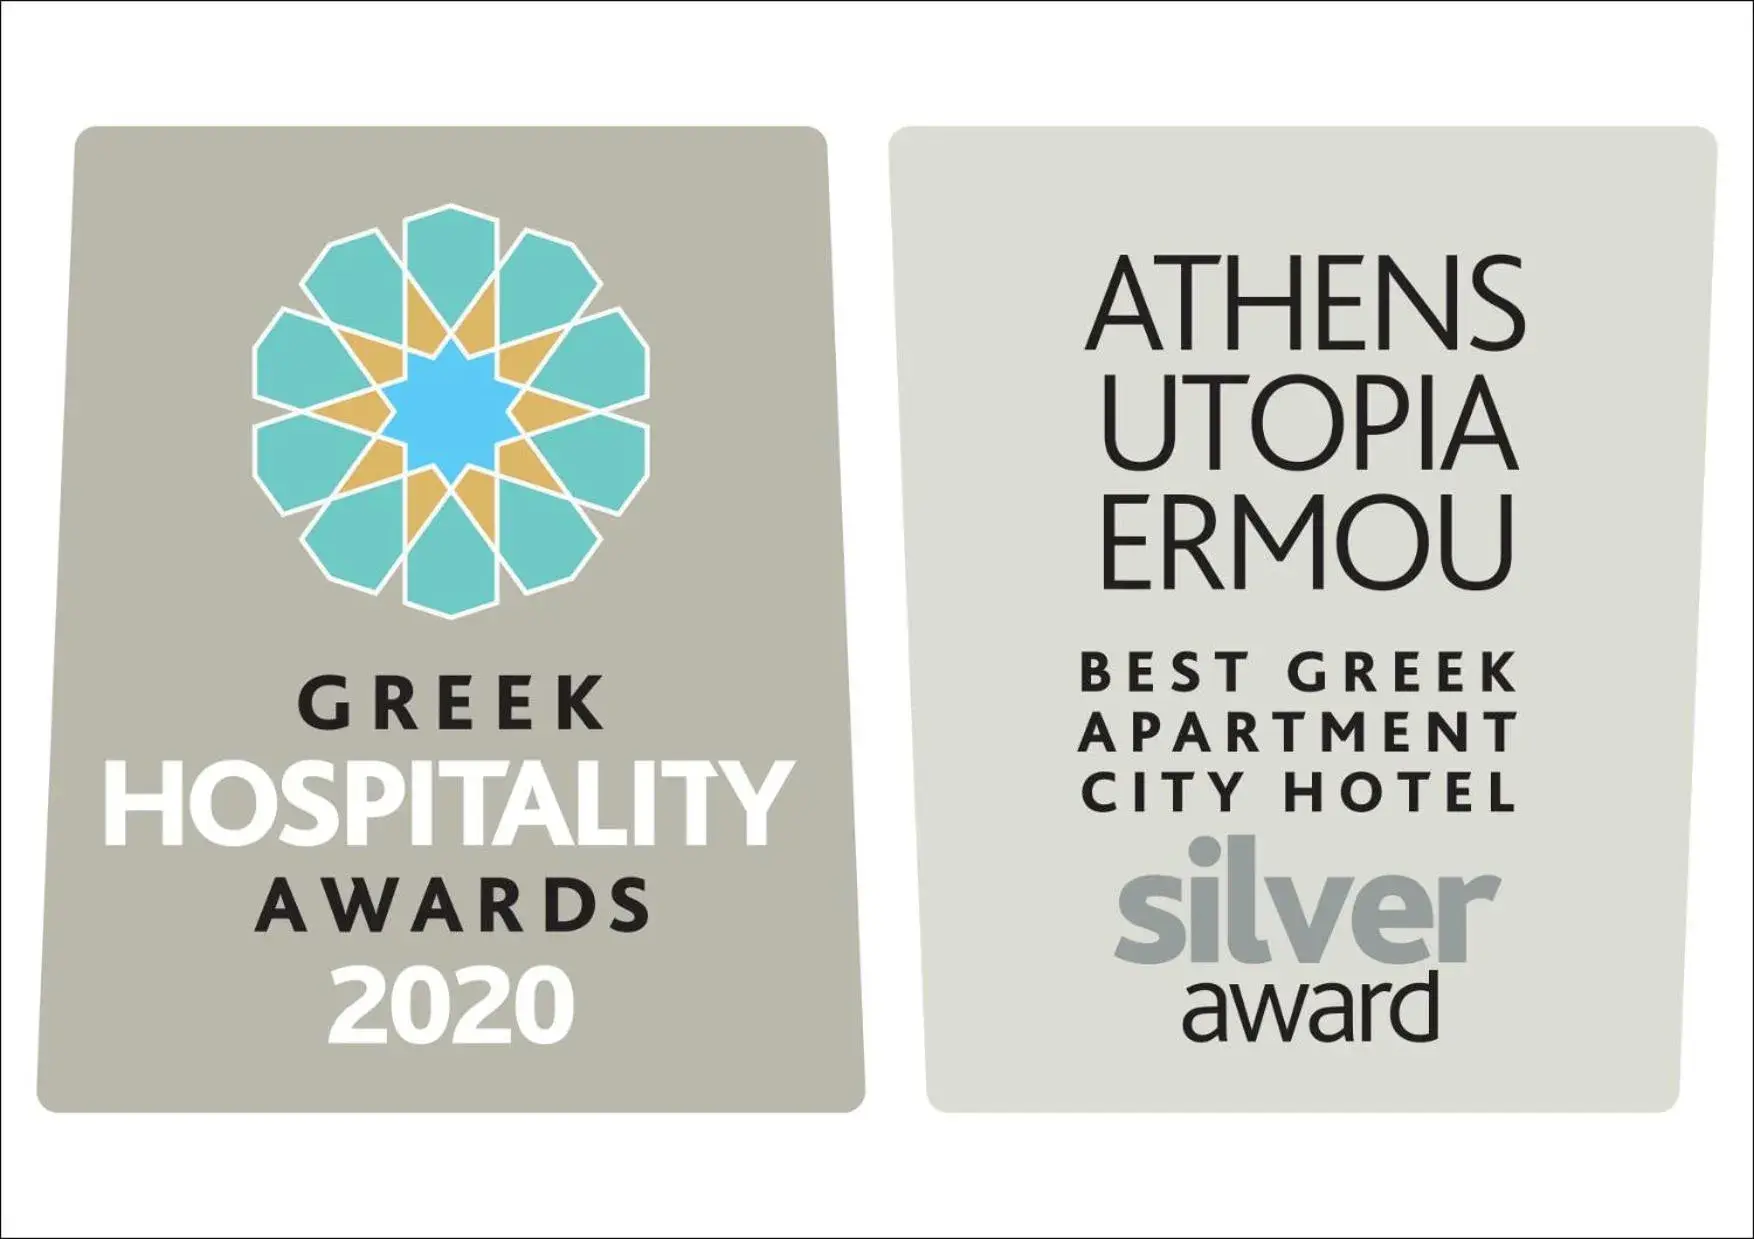 Property logo or sign in Athens Utopia Ermou